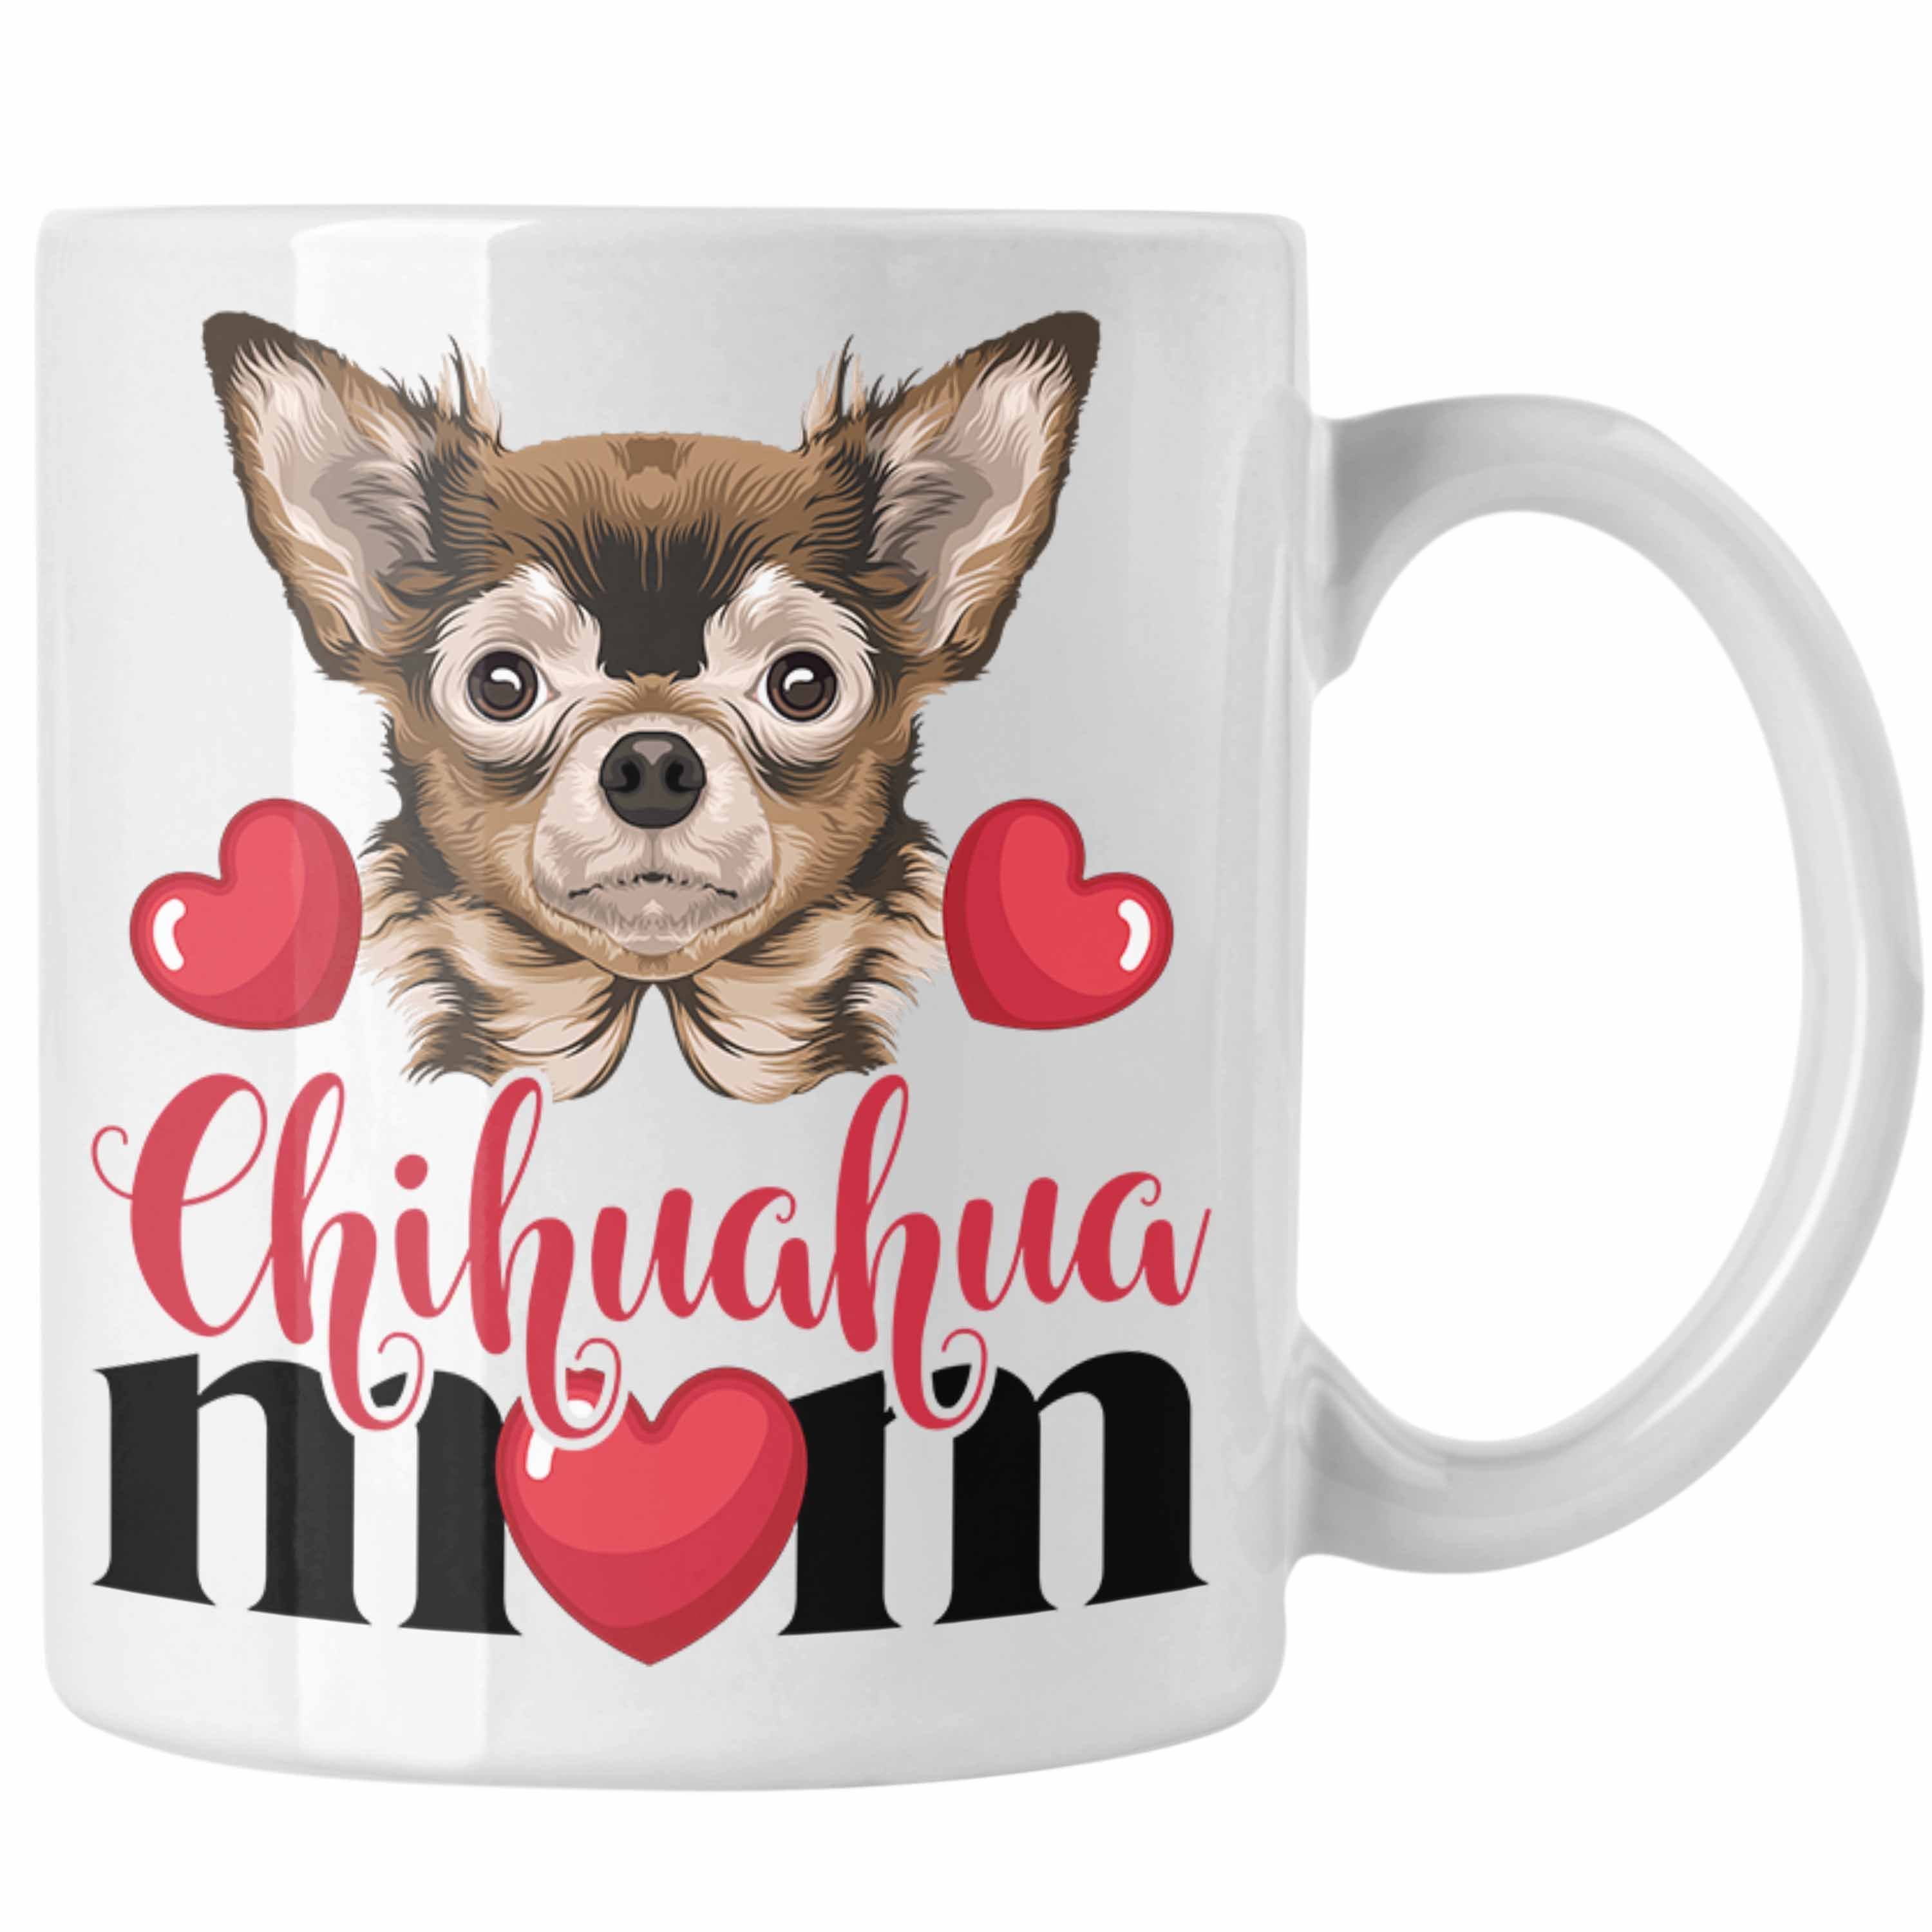 Besitzer Geschenkidee Trendation Chihuhahua Frauchen Tasse Tasse Mama Weiss Mom Kaffee-Becher